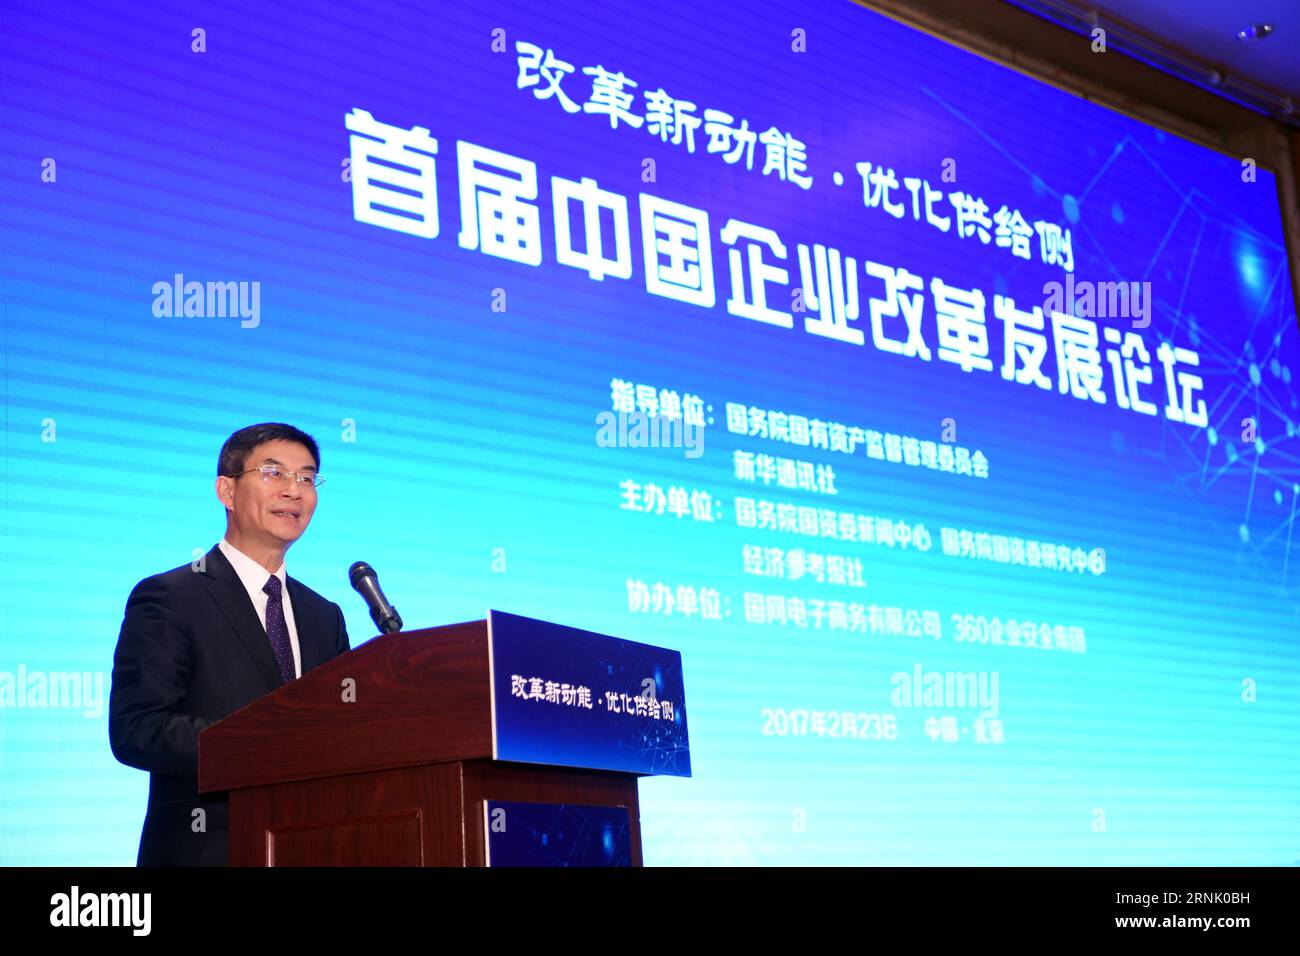 (170223) -- BEIJING, Feb. 23, 2017 -- Liu Zhengrong, vice president of Xinhua News Agency, addresses a forum on reform and development of Chinese enterprises in Beijing, capital of China, Feb. 23, 2017. ) (ry) CHINA-BEIJING-FORUM-ENTERPRISE (CN) JinxLiangkuai PUBLICATIONxNOTxINxCHN   Beijing Feb 23 2017 Liu Zhengrong Vice President of XINHUA News Agency addresses a Forum ON Reform and Development of Chinese Enterprises in Beijing Capital of China Feb 23 2017 Ry China Beijing Forum Enterprise CN JinxLiangkuai PUBLICATIONxNOTxINxCHN Stock Photo